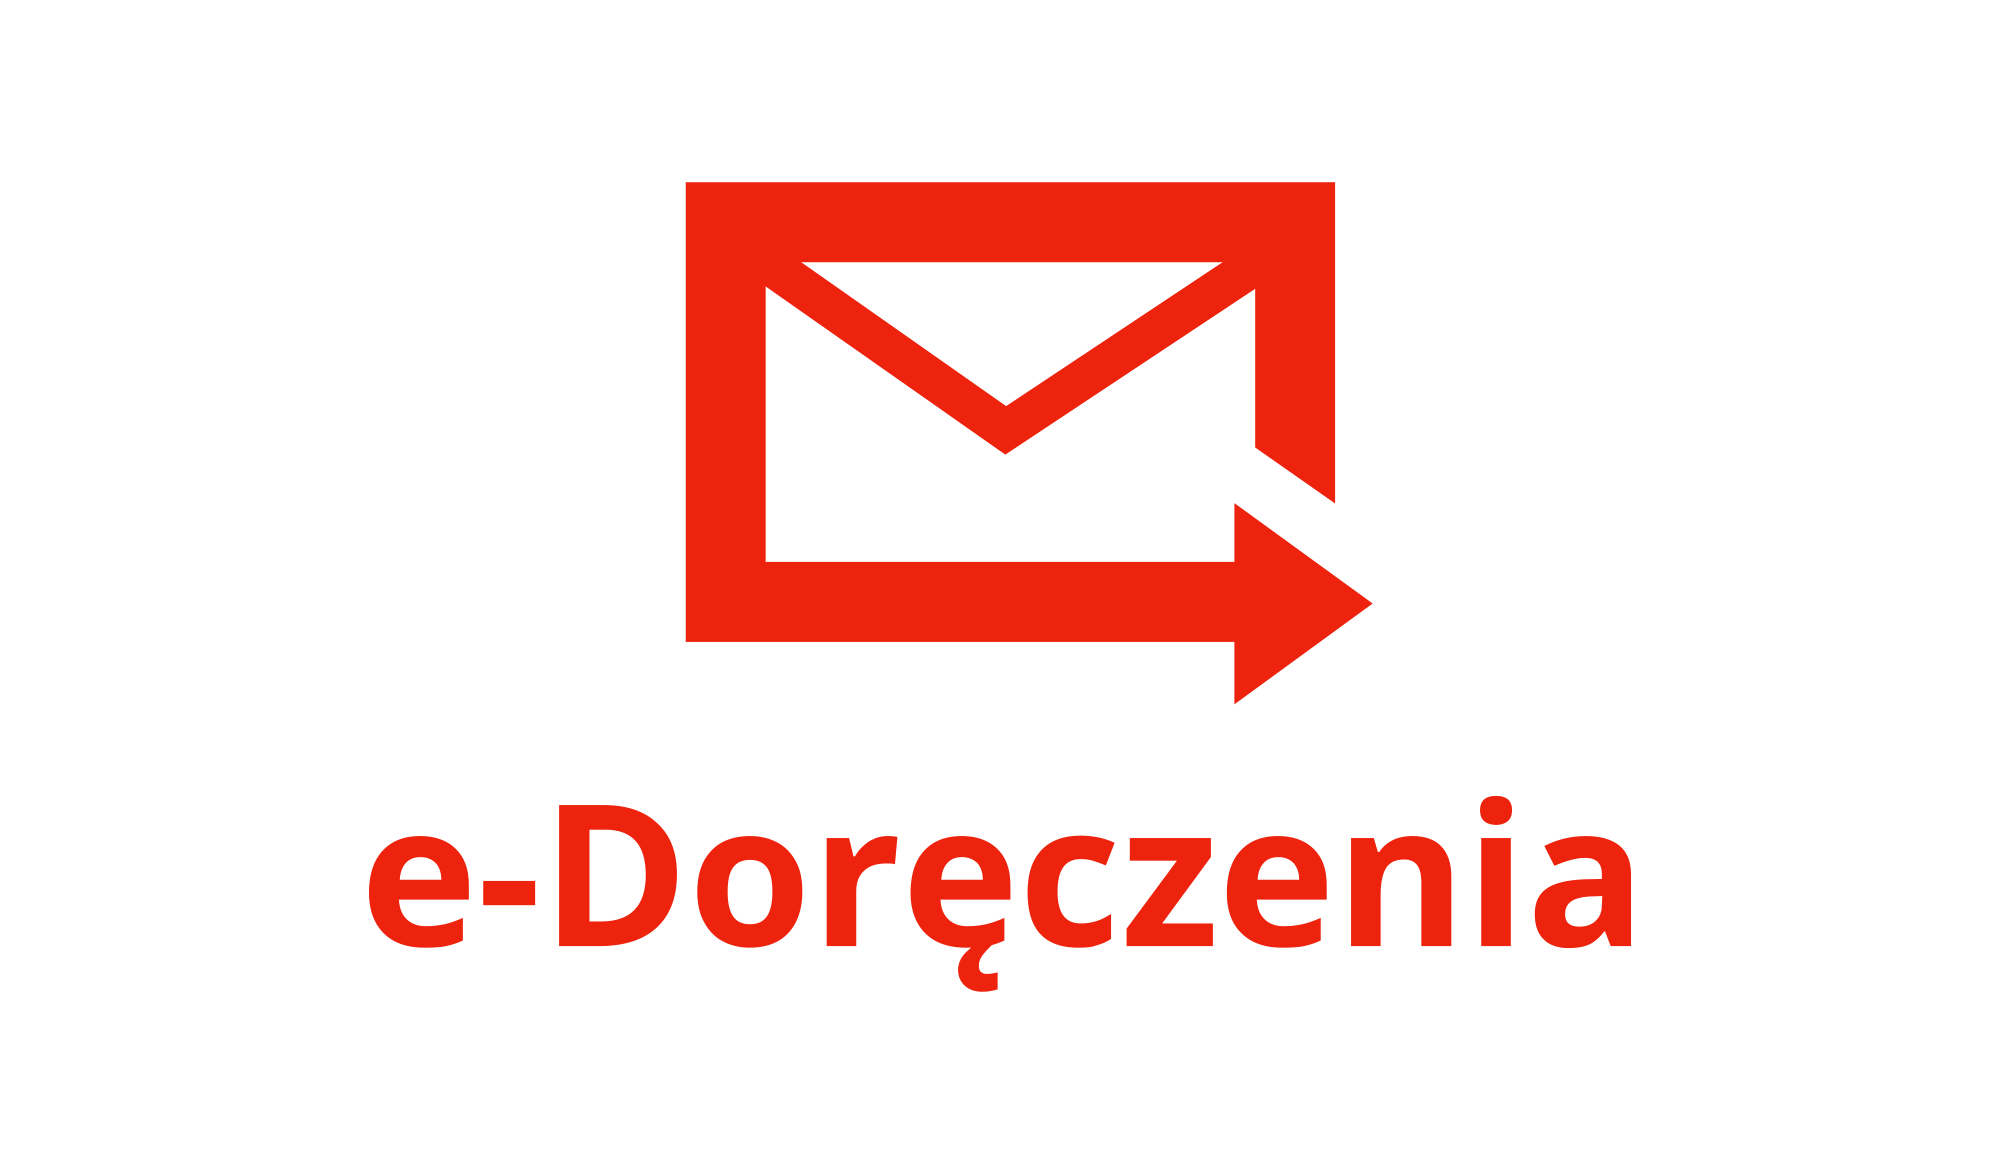 edoreczenia.gov.pl